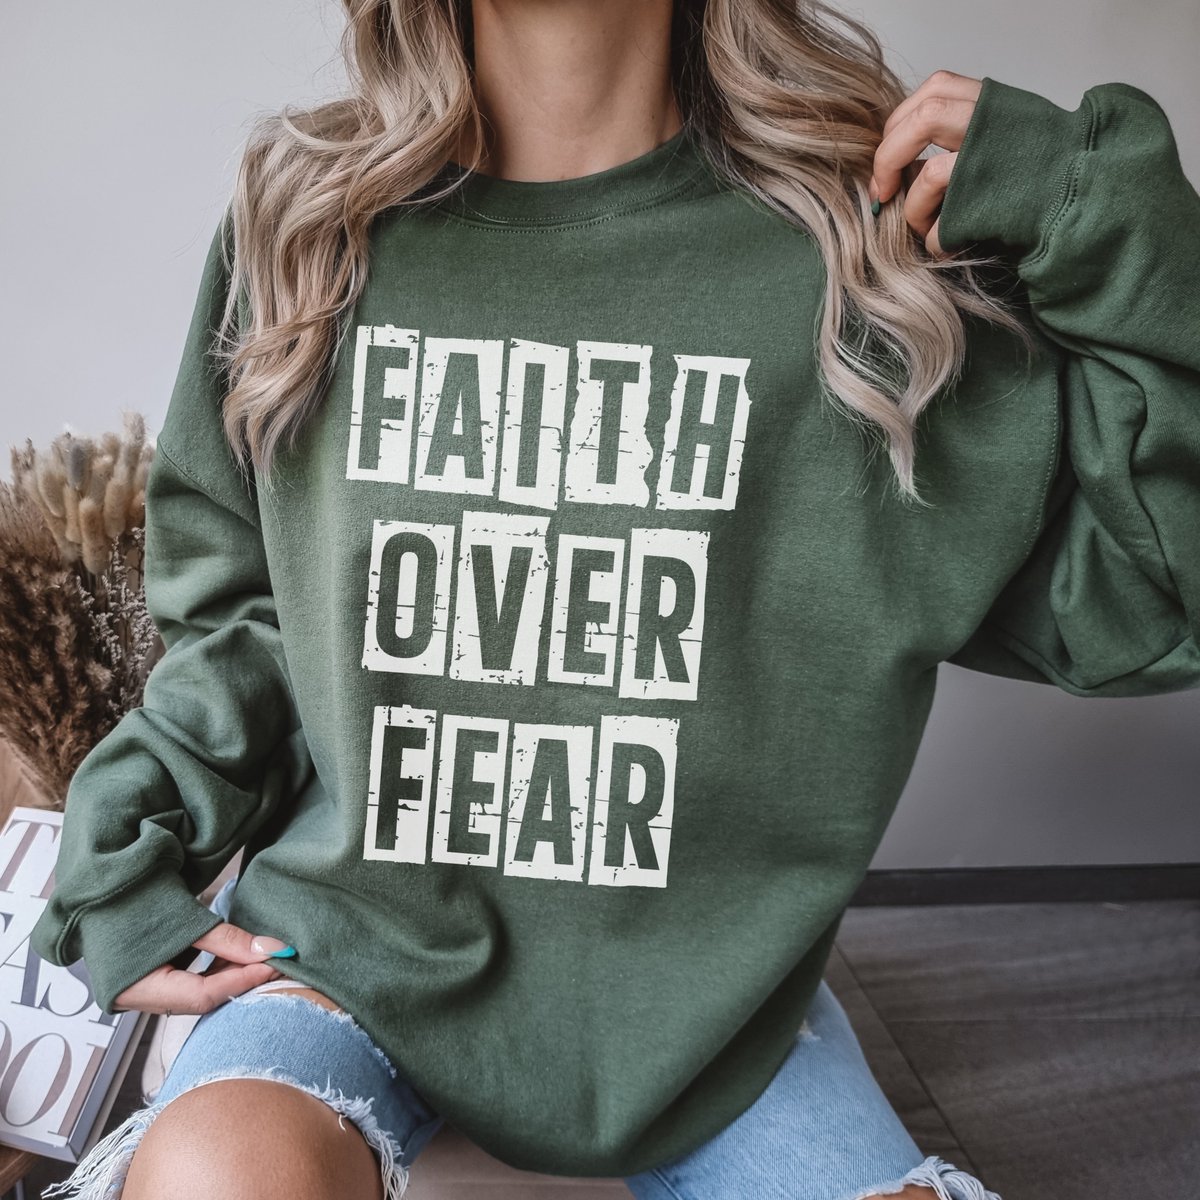 Faith over Fear Sweatshirt, Psalm 34 Christian Sweatshirt, Distressed Grungy Shirt, Bible Verse Shirt, Religious Sweater, Faith Sweatshirt etsy.me/49yiVcp #biblejesusshirt #bibleverseshirt #christianaesthetic #christiangift #christianshirt #churchsweater #faithoverfeartee